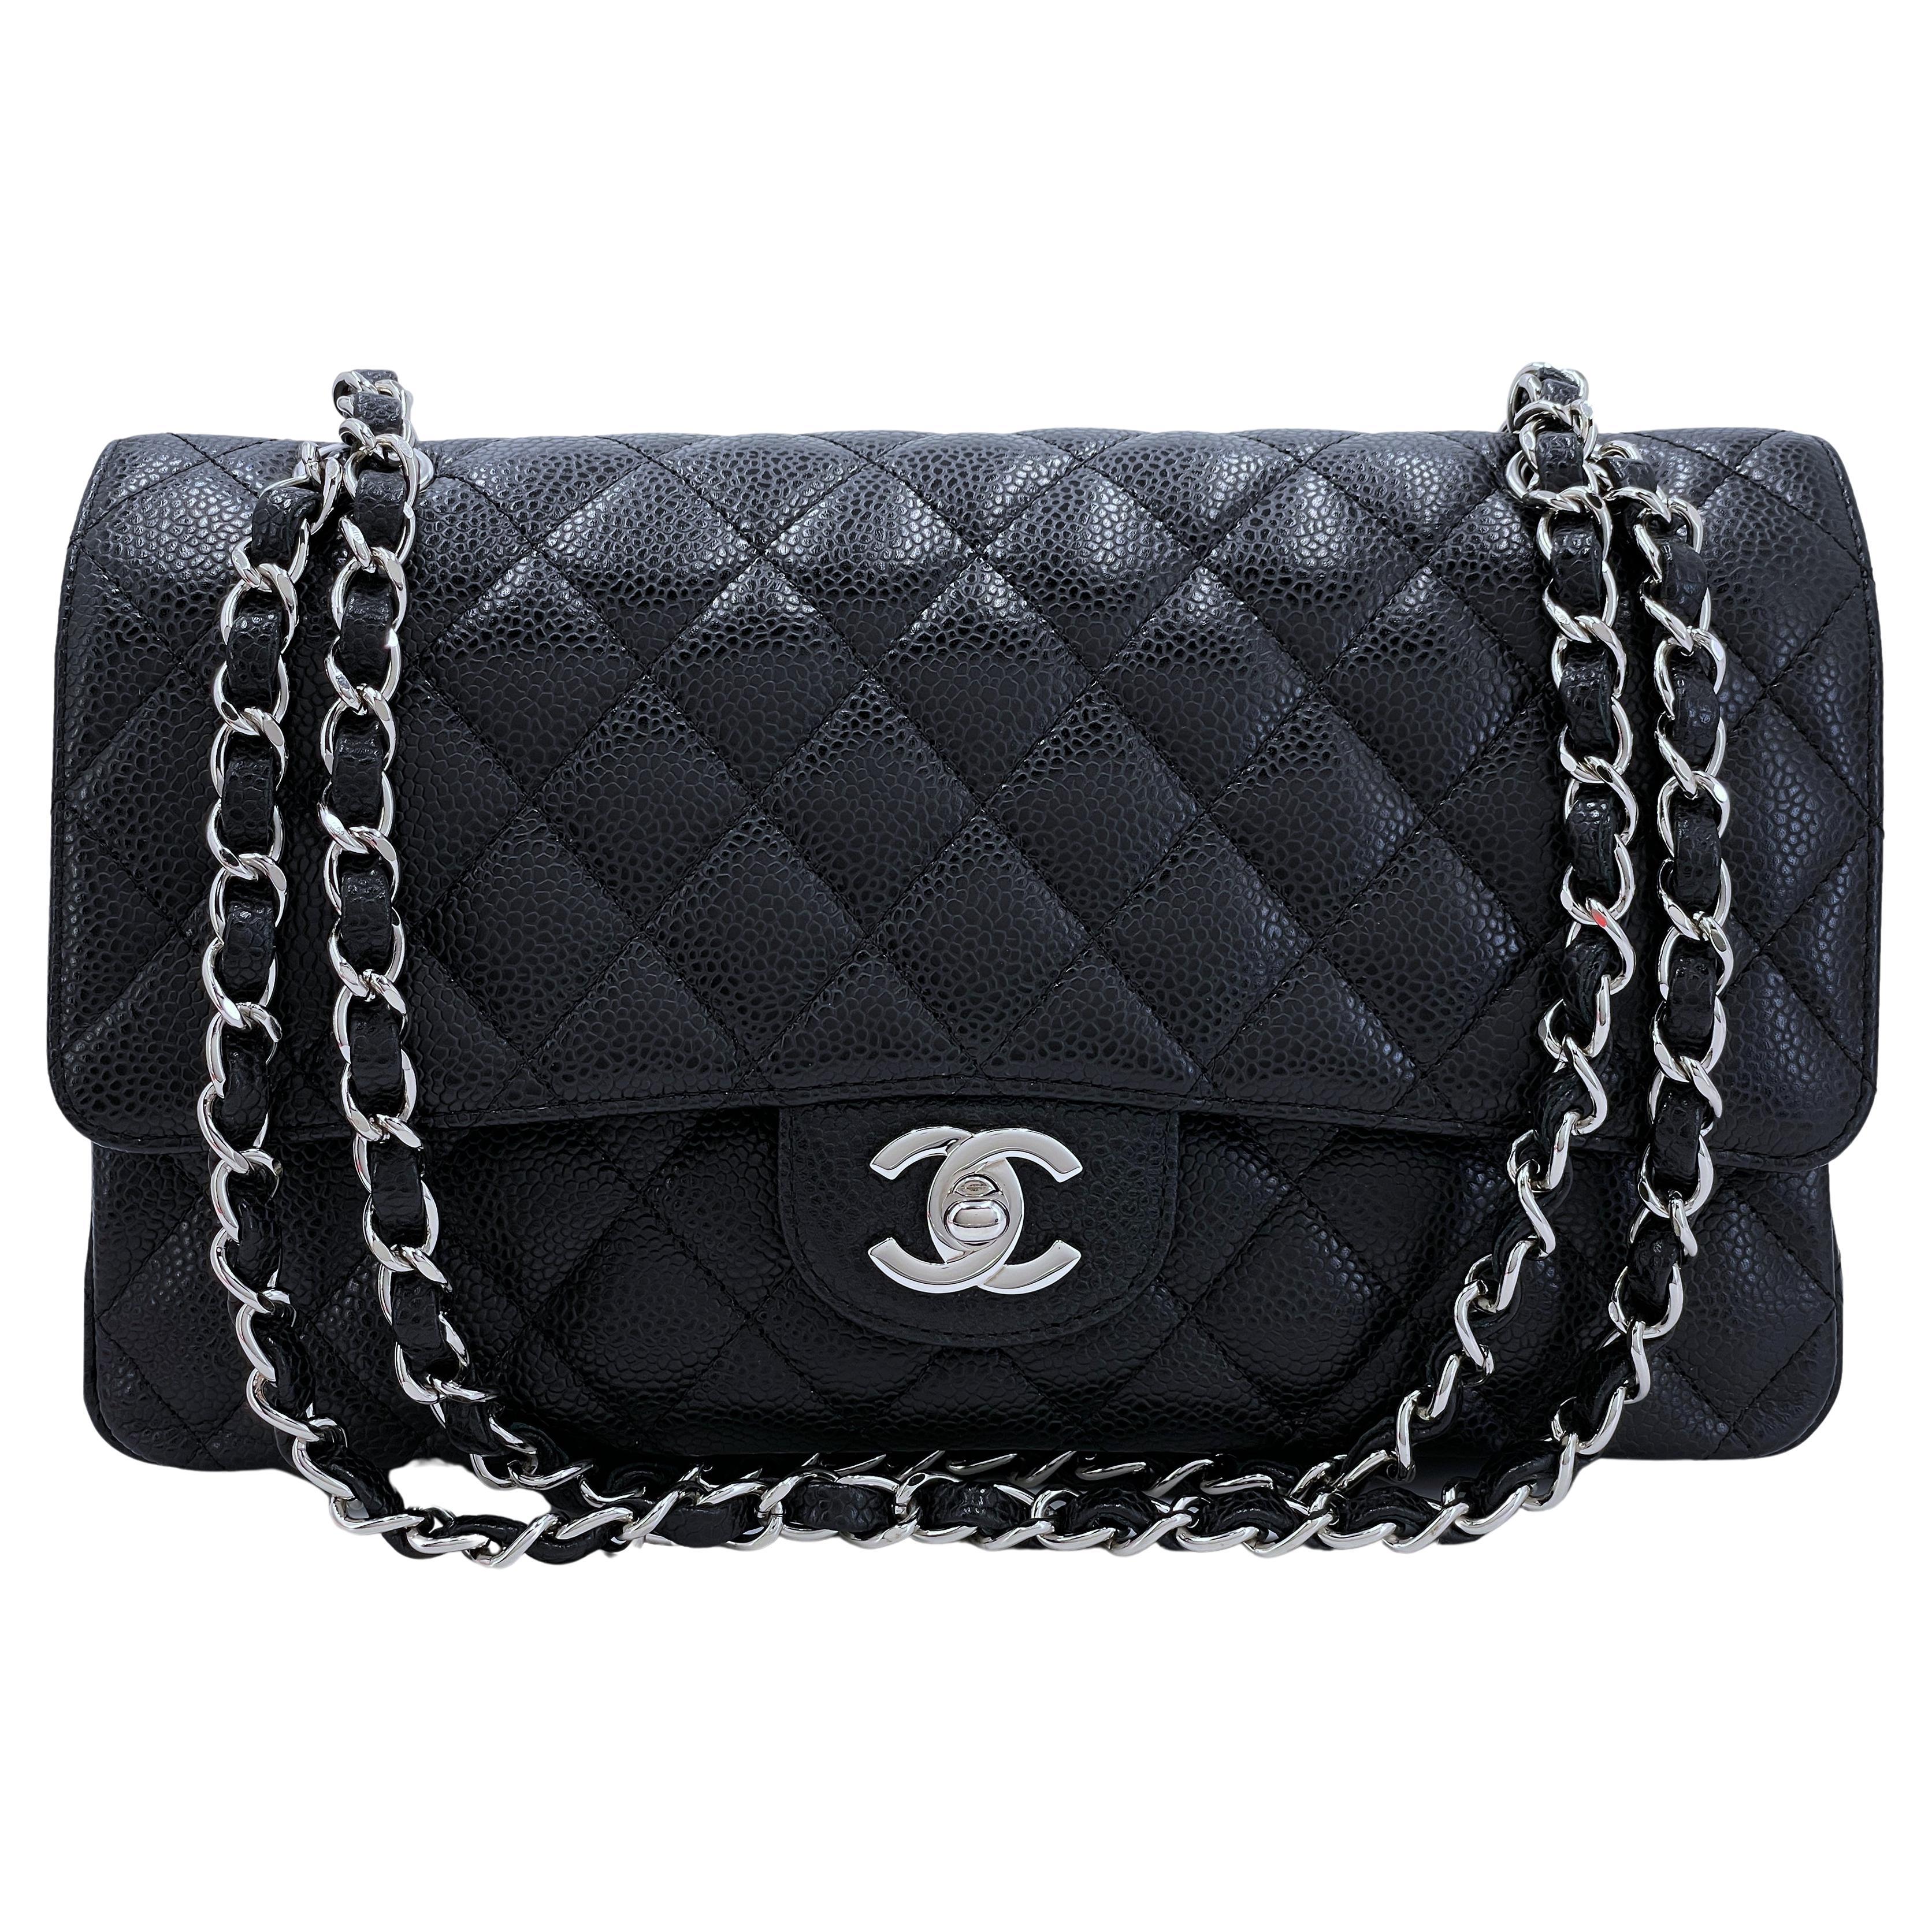 Chanel 2009 Black Caviar Medium Classic Double Flap Bag SHW 65078